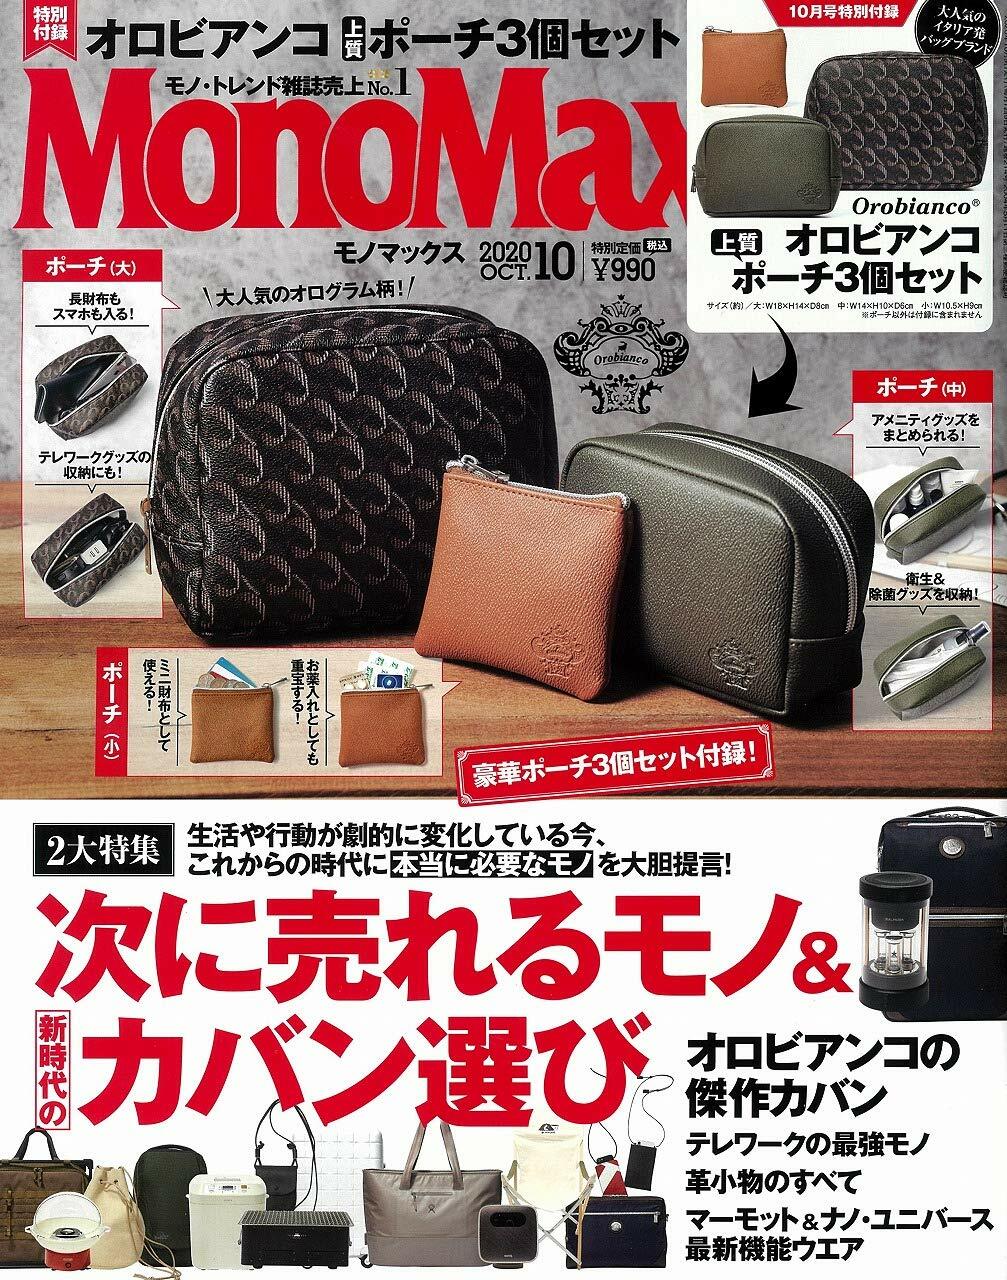 Mono Max (モノ·マックス) 2020年 10月號 [雜誌] (月刊, 雜誌)